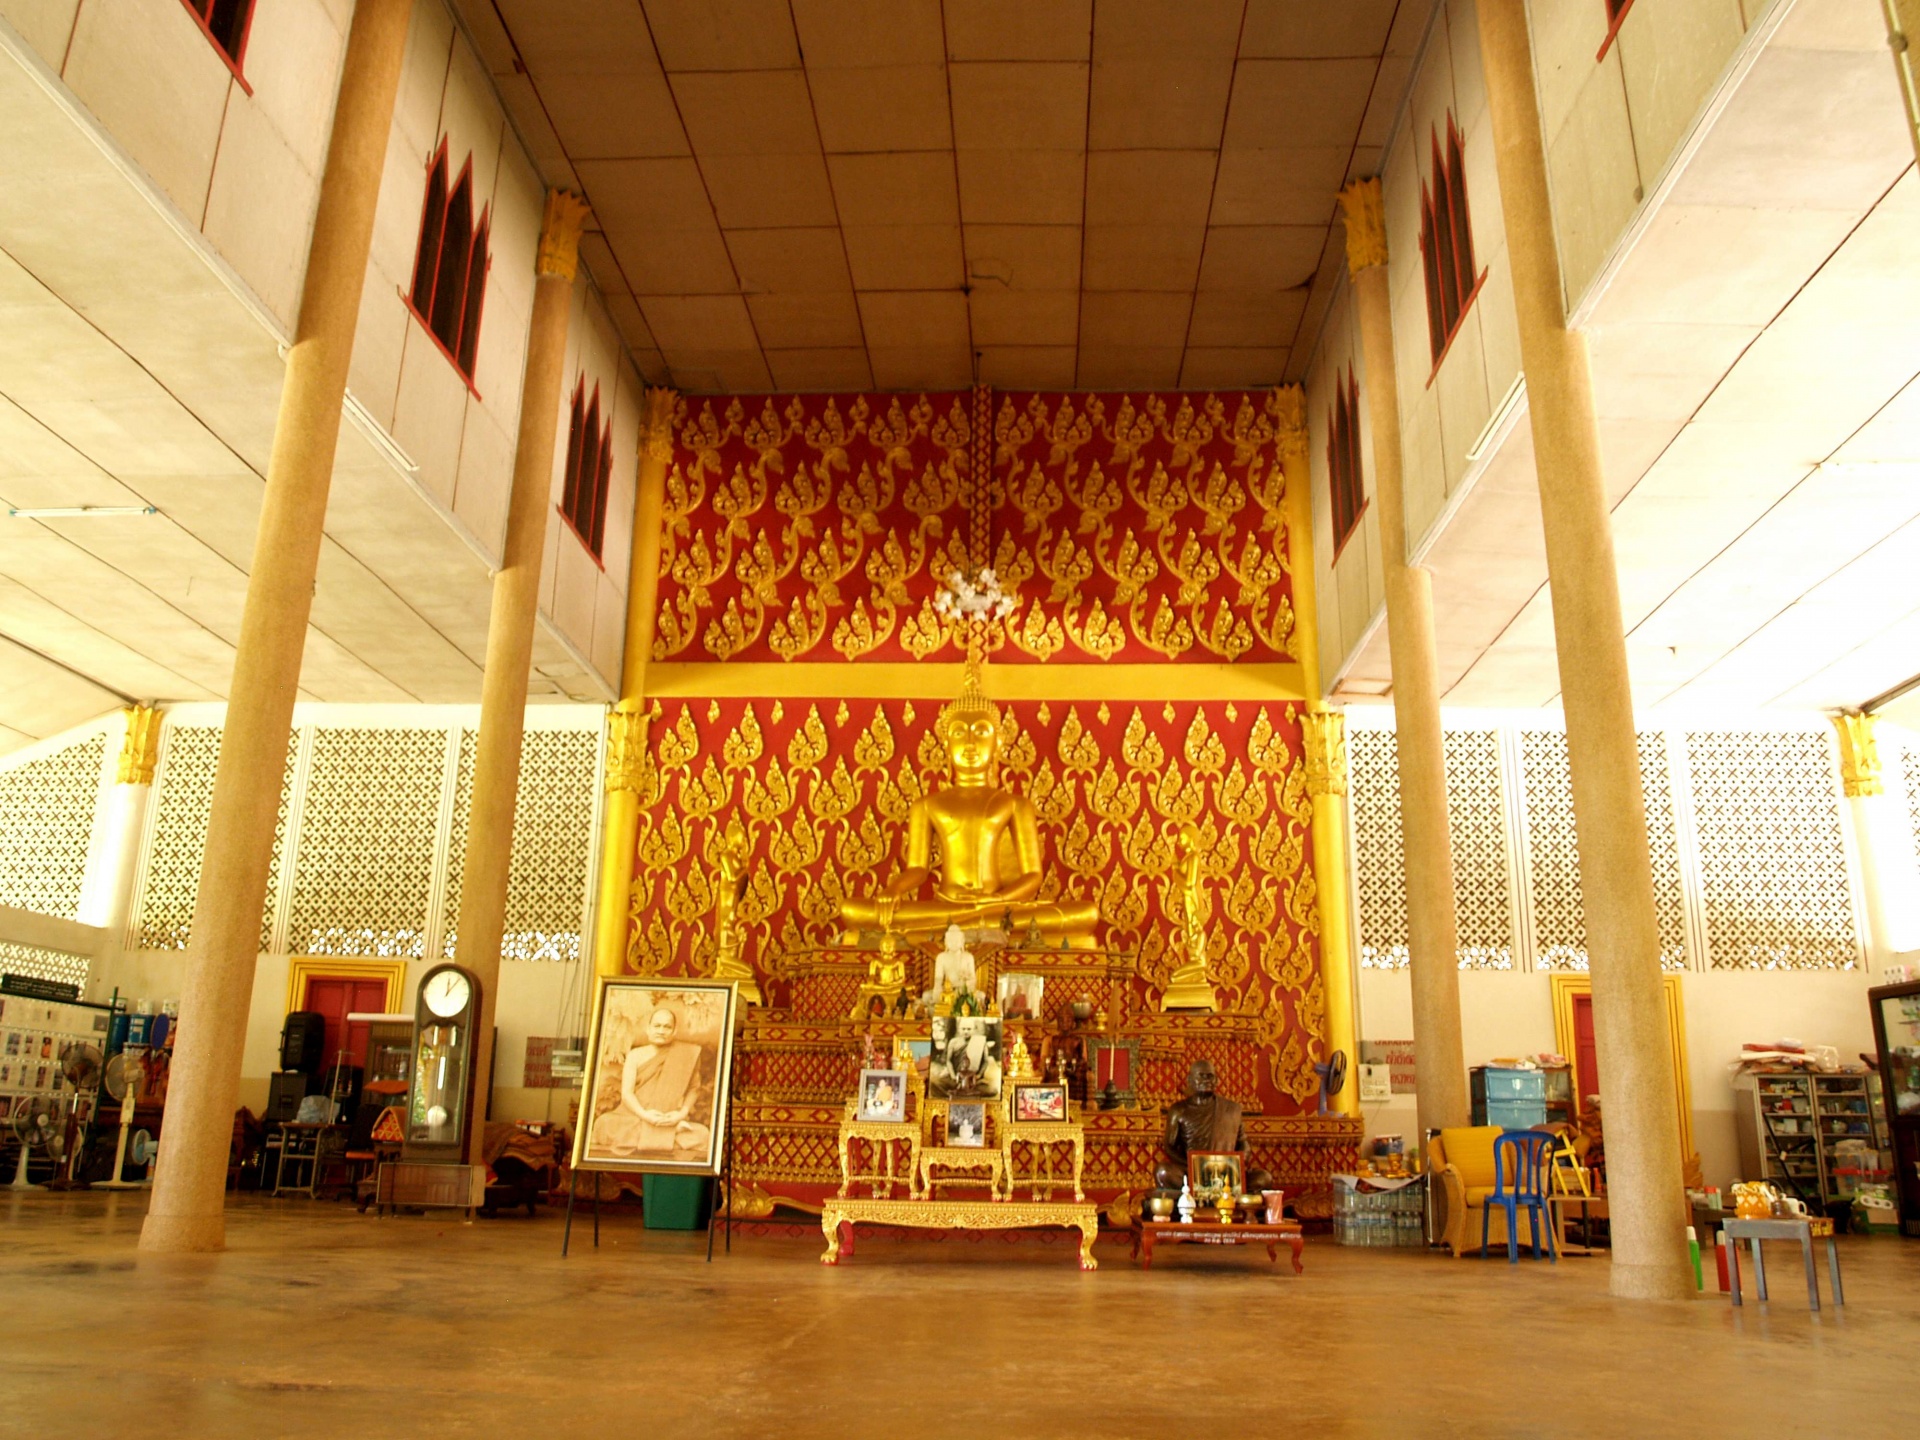 Wat tam zong phet tempel, Amphoe Mueang